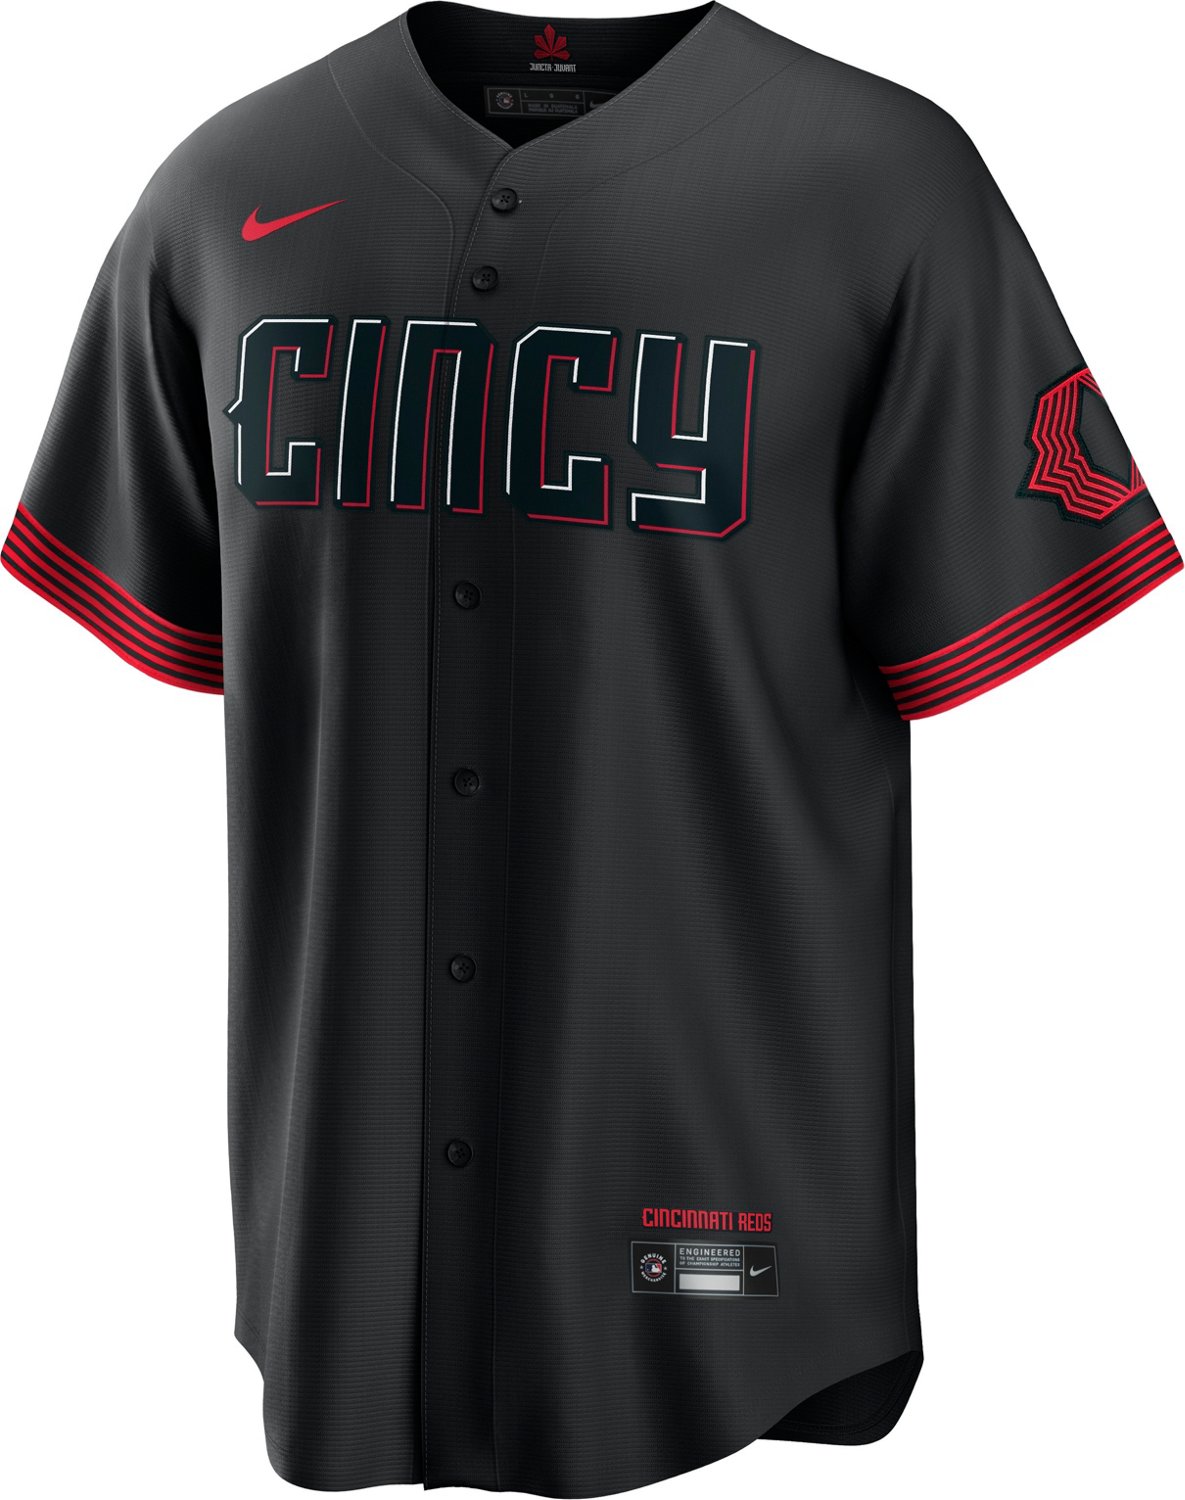 Black Cincinnati Reds Baseball Jersey Flaming Ball Gift For MLB Fans